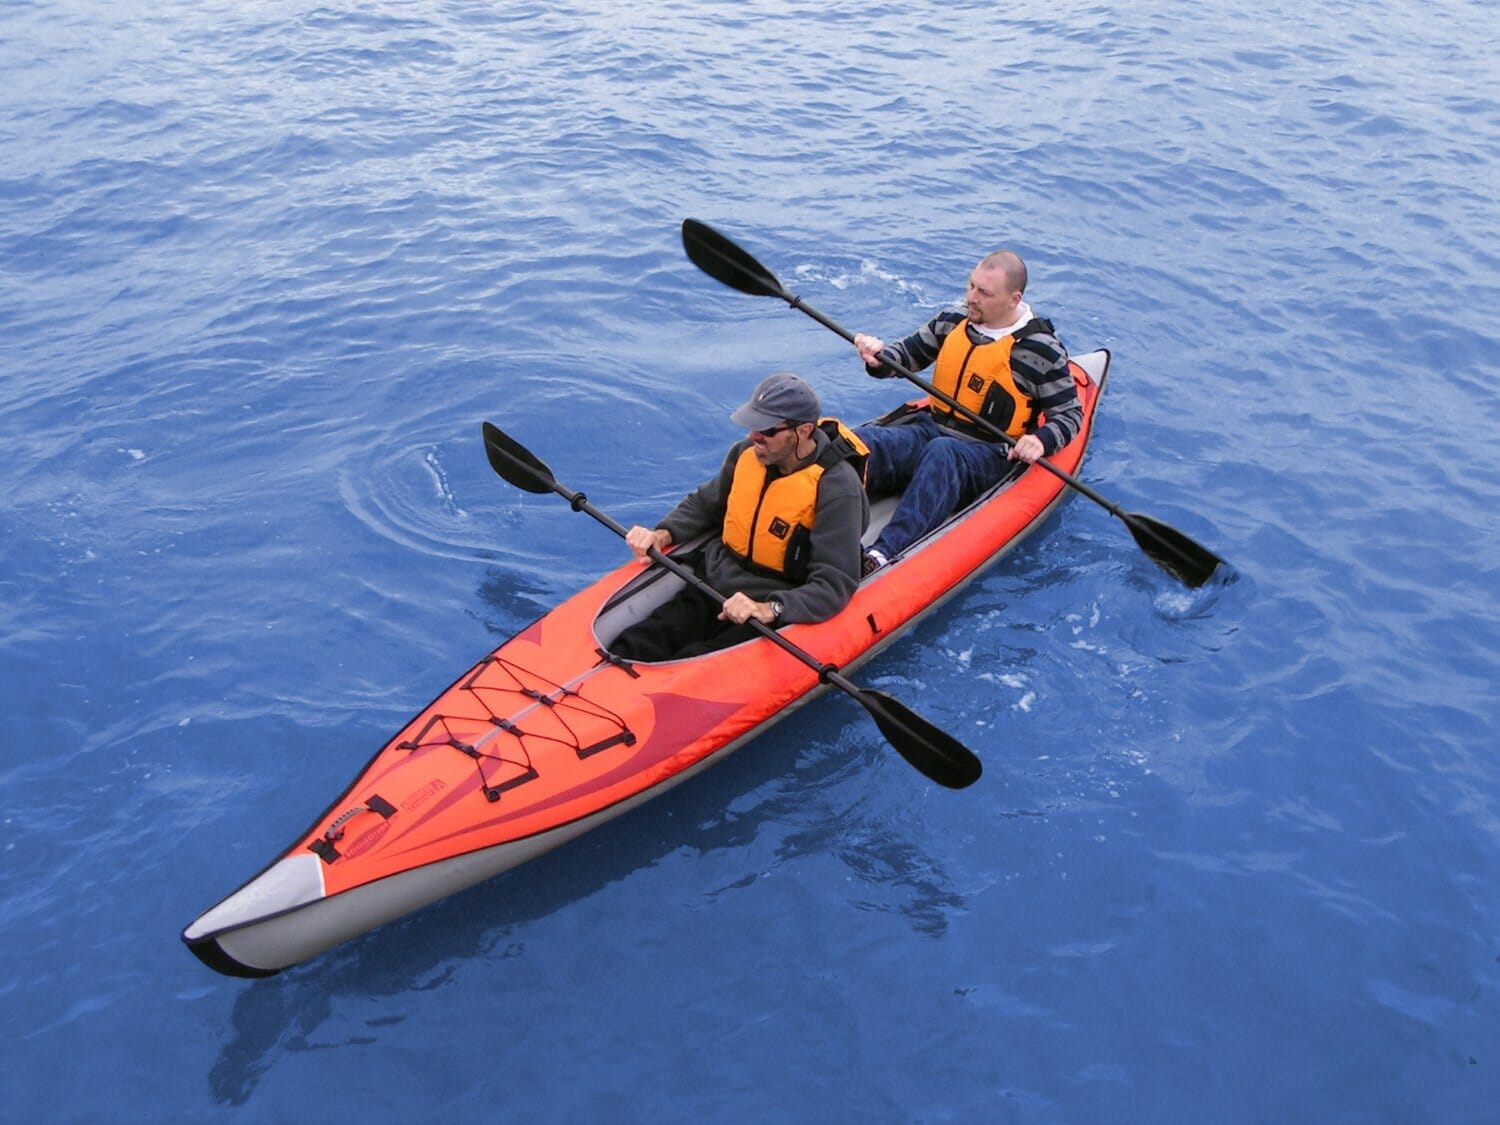 AE1007-R AdvancedFrame Convertible Inflatable Kayak Review